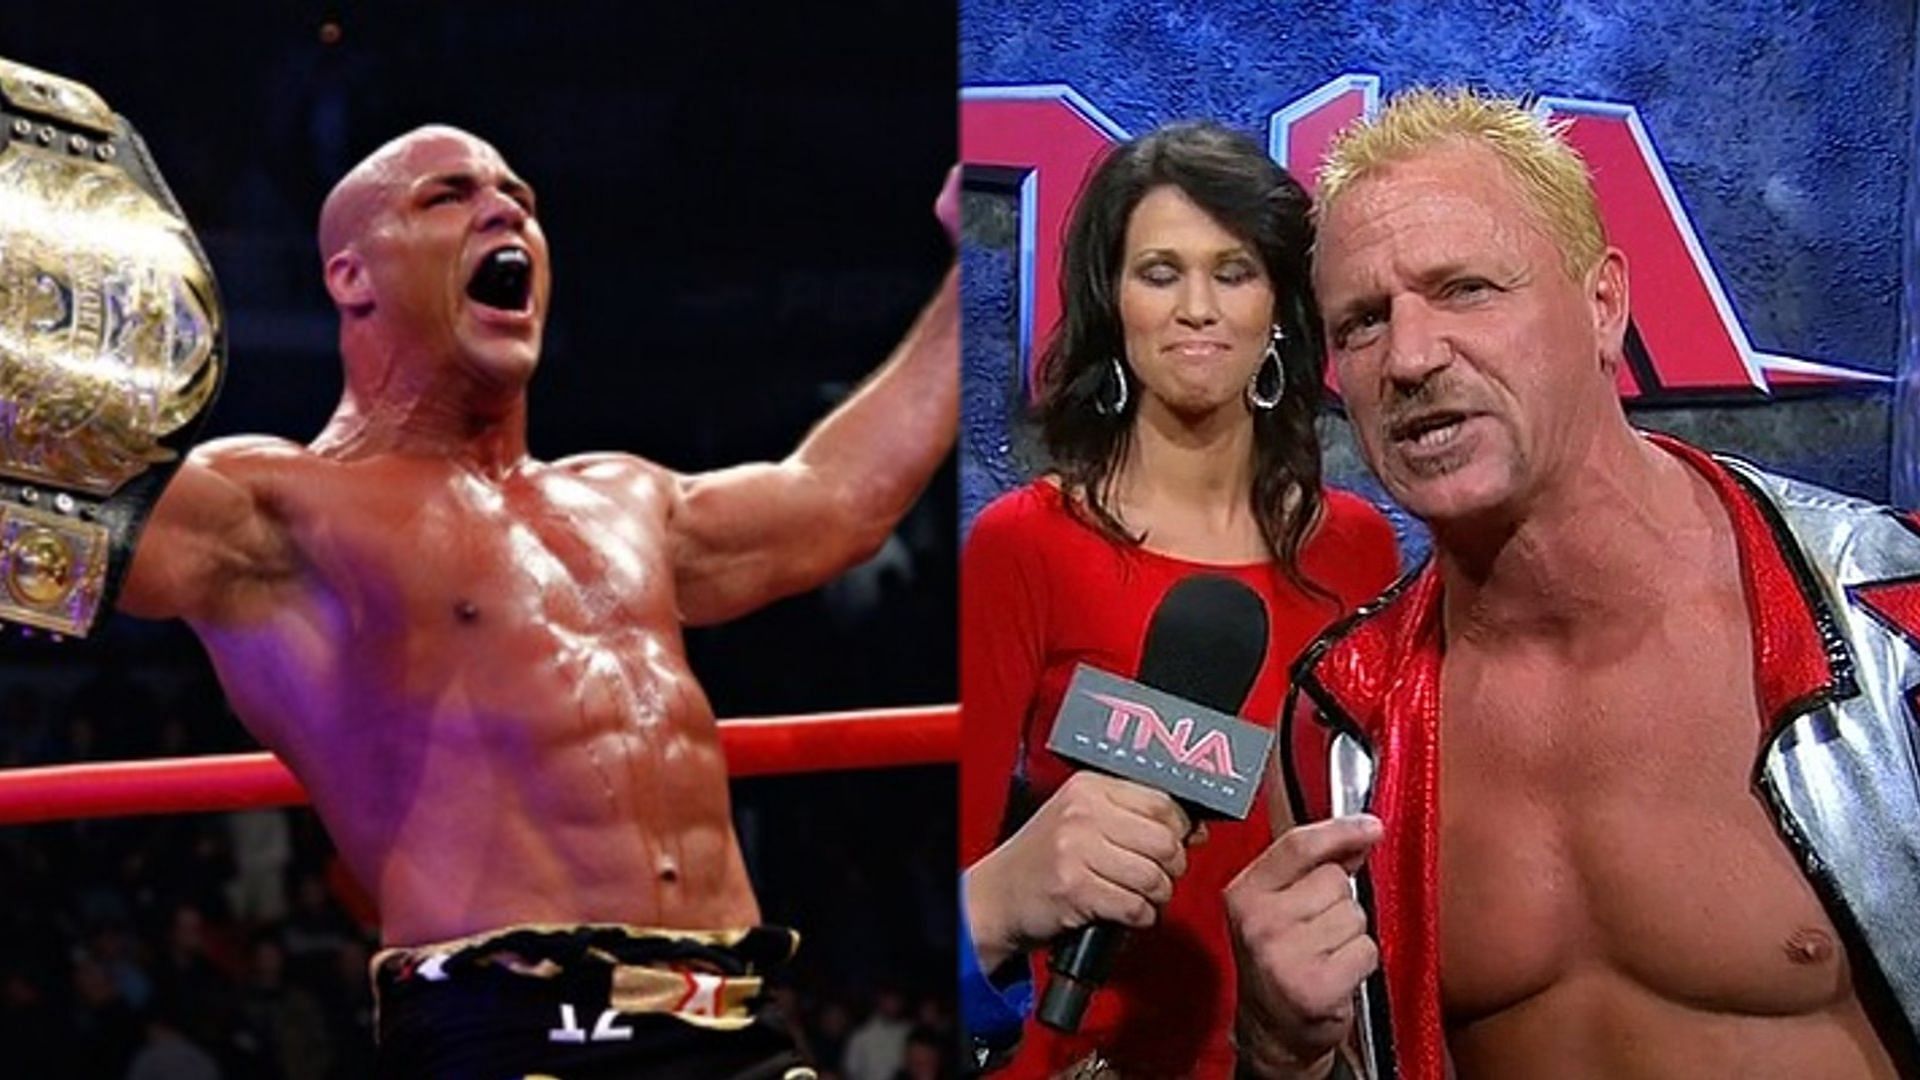 Jeff Jarrett and Kurt Angle had a heated feud during their TNA tenure.